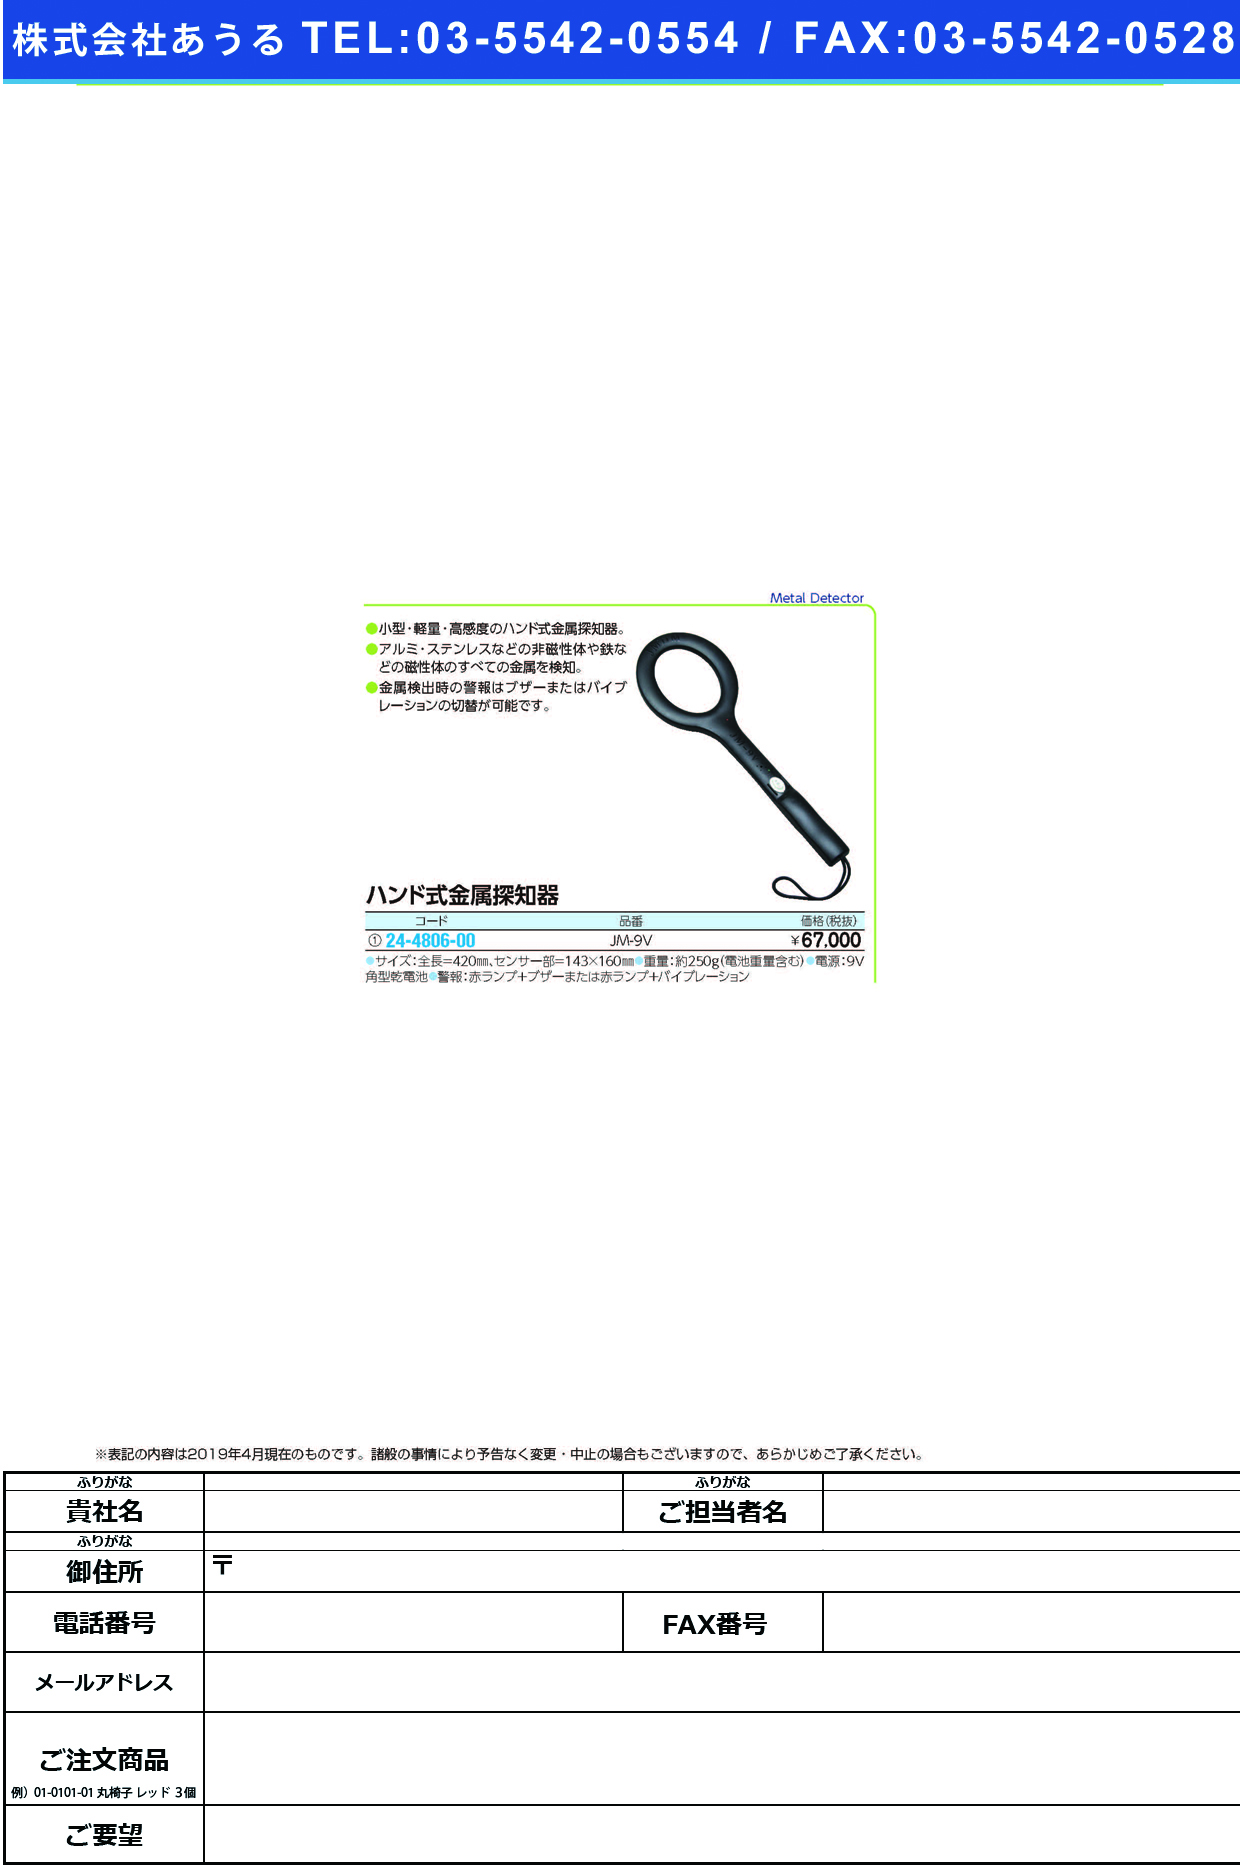 (24-4806-00)ハンド式金属探知器 JM-9V ﾊﾝﾄﾞｼｷｷﾝｿﾞｸﾀﾝﾁｷ【1台単位】【2019年カタログ商品】